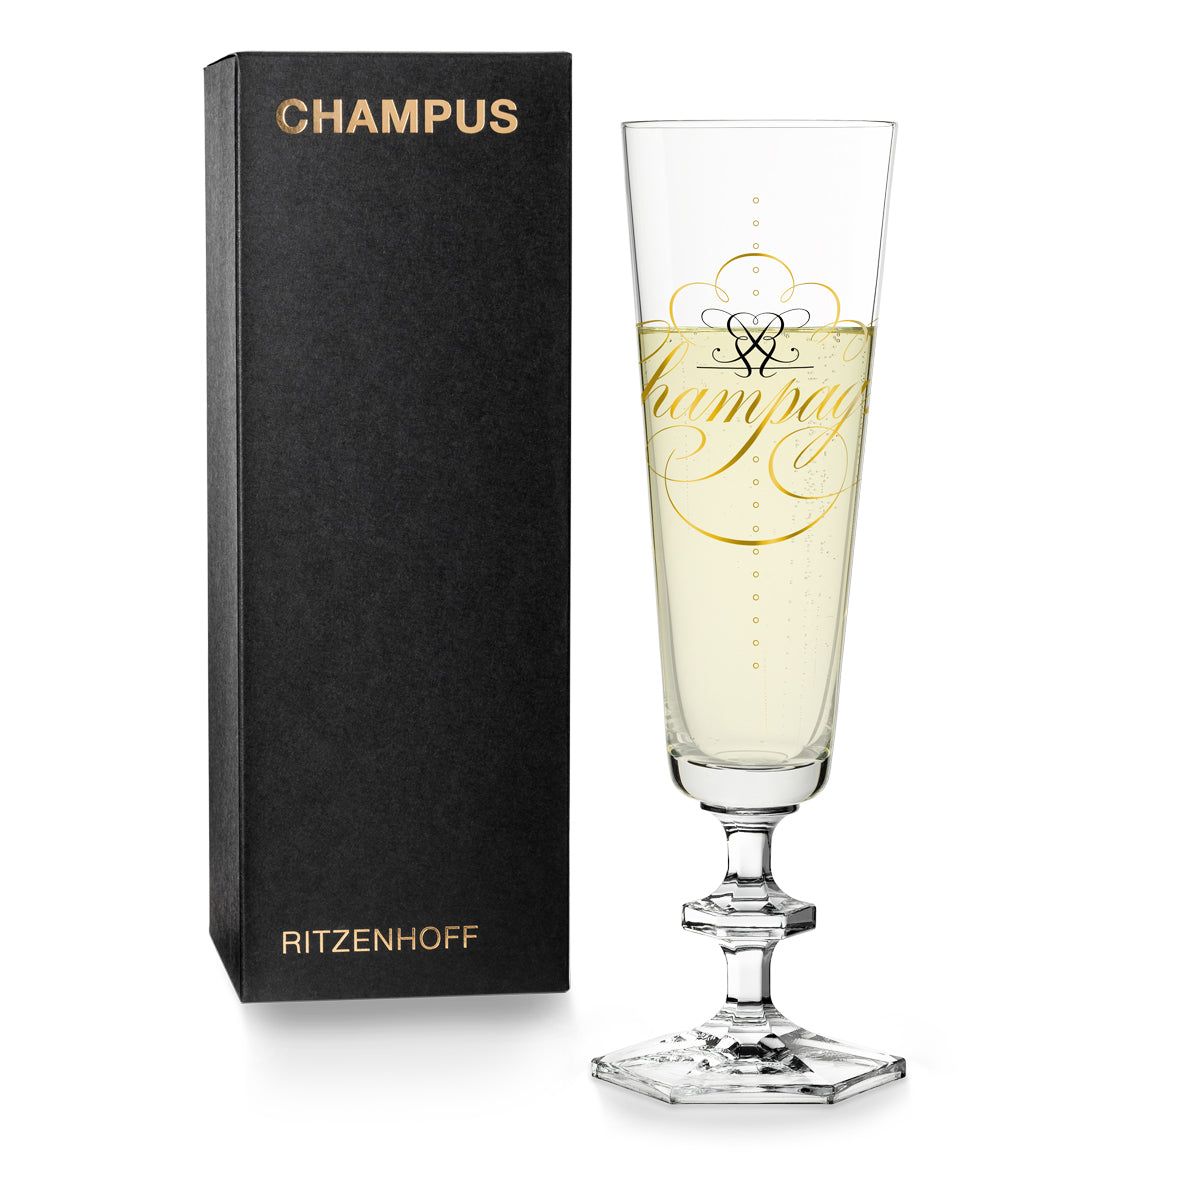 Ritzenhoff Champagne Glass. Made in Marsberg Germany.